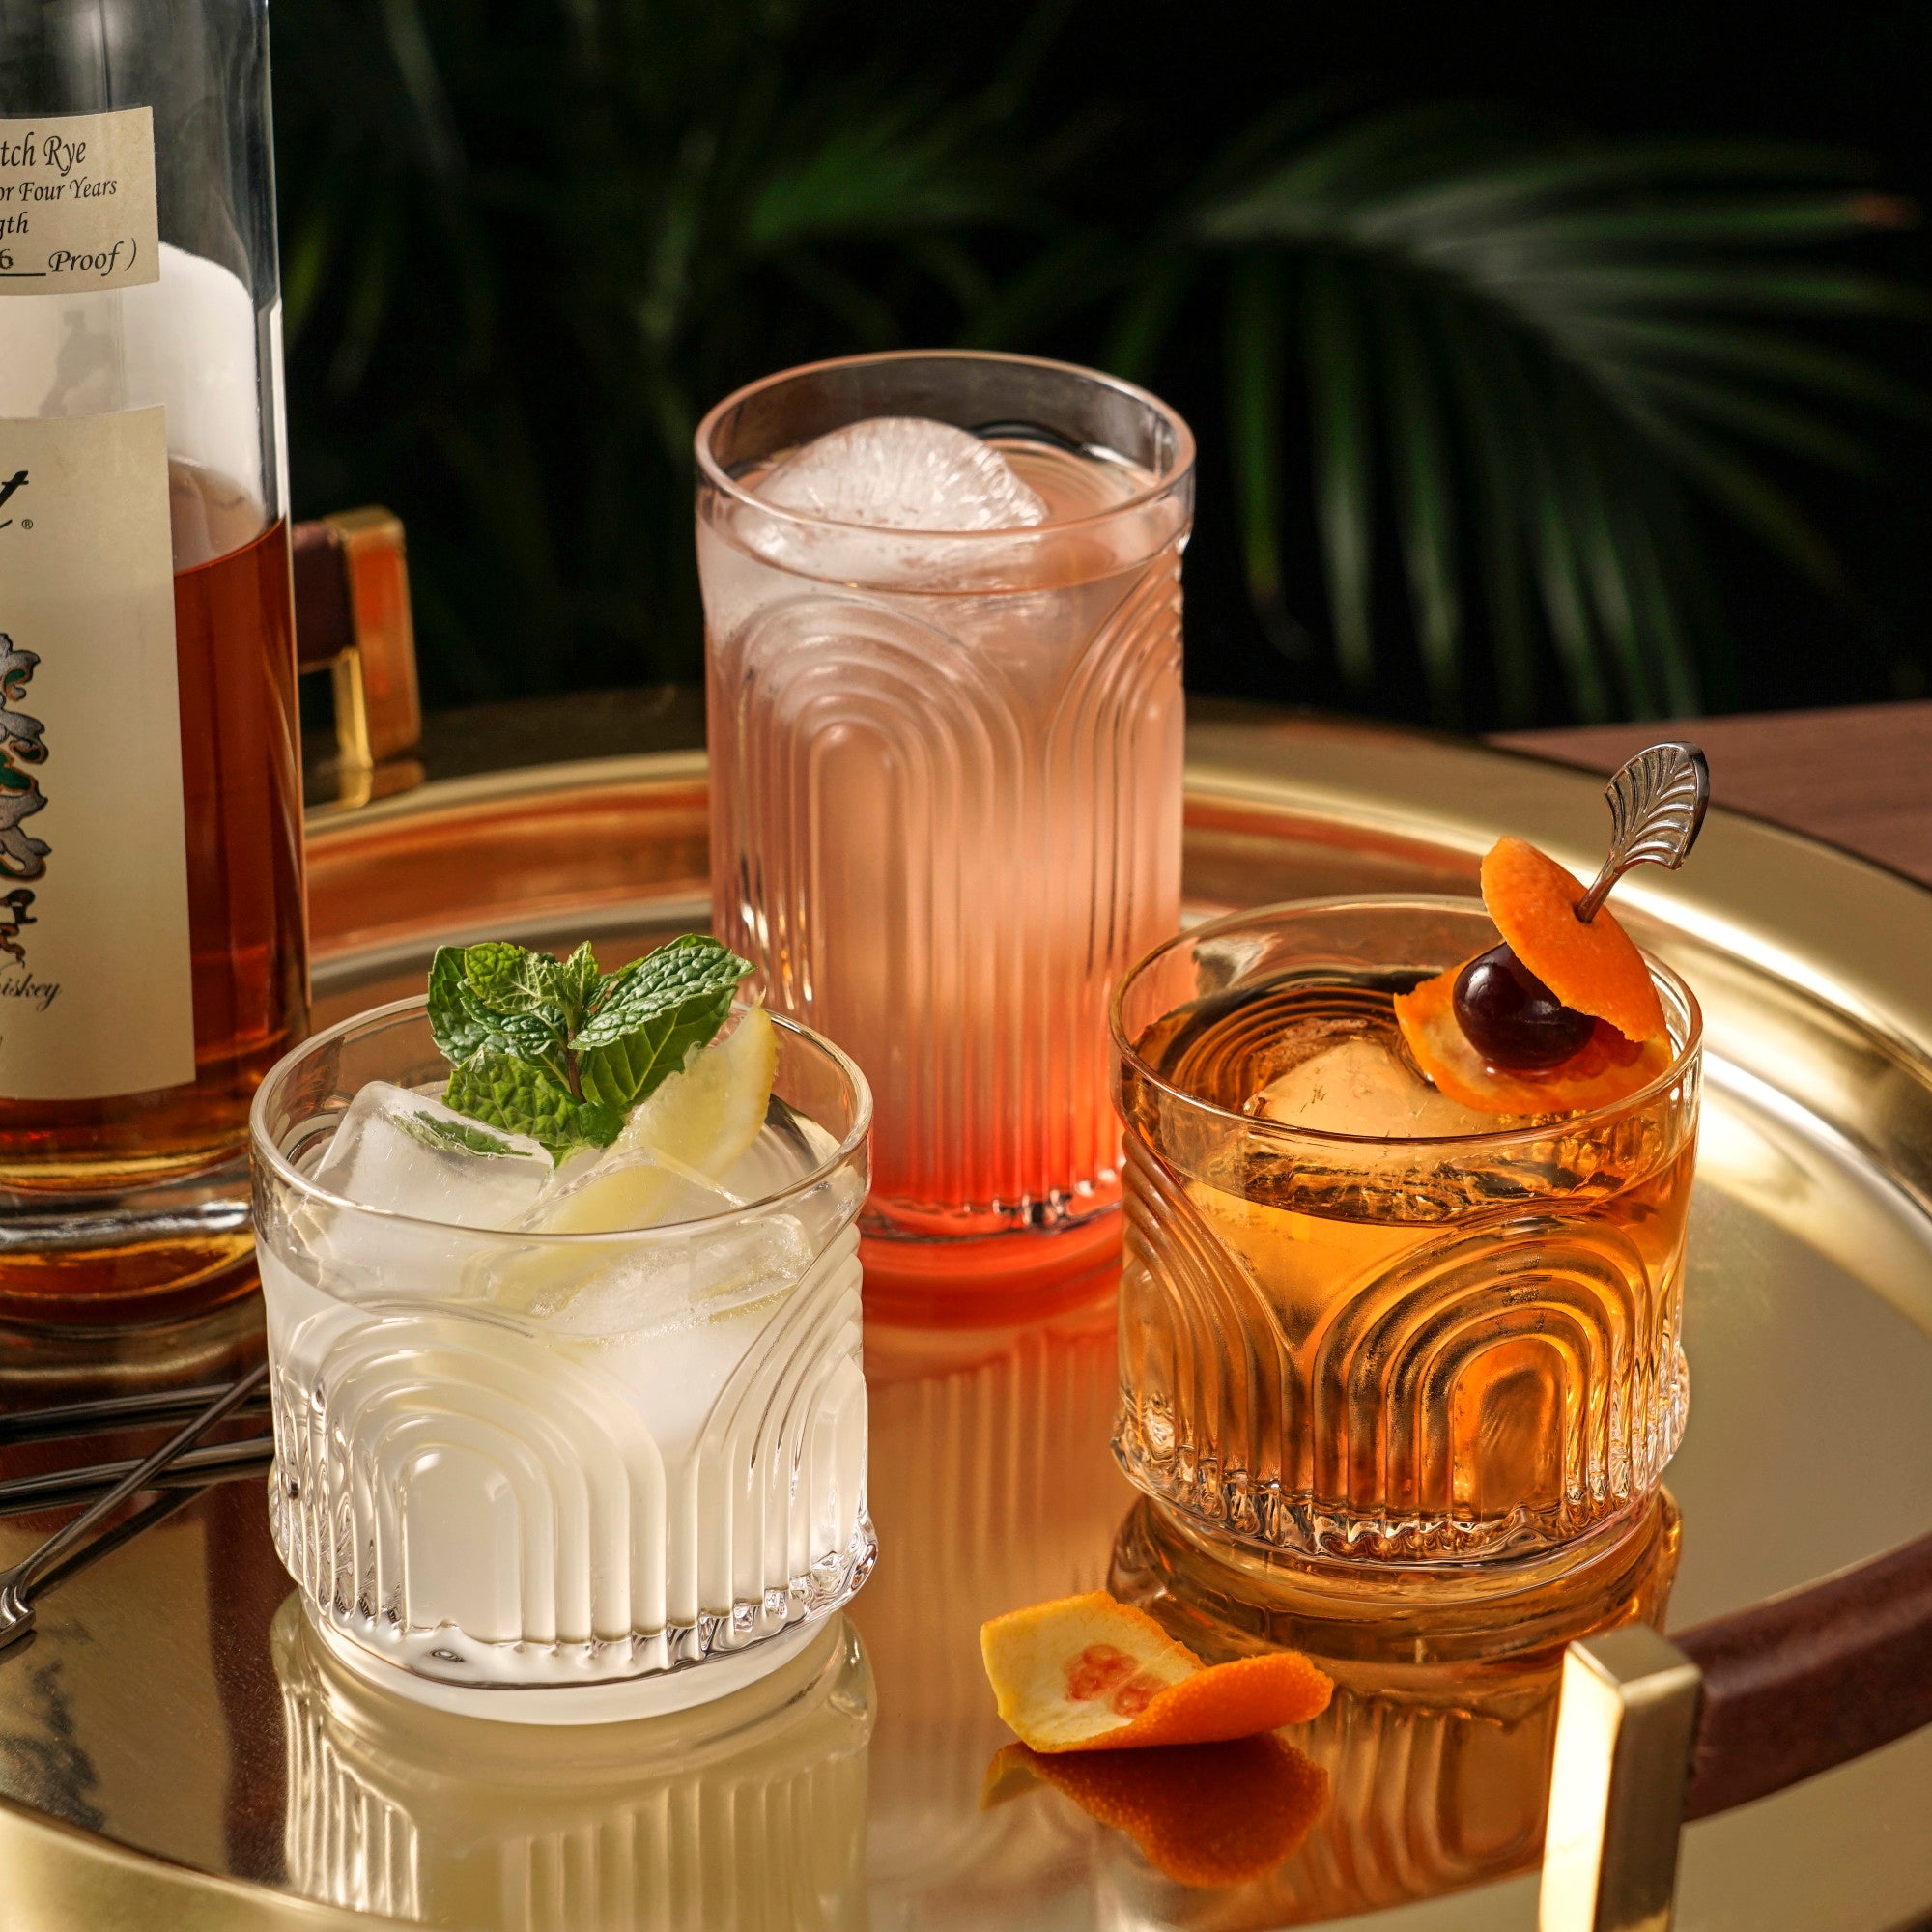 Viski Gatsby Highball Glass, Vintage Cocktail Glasses, Art Deco